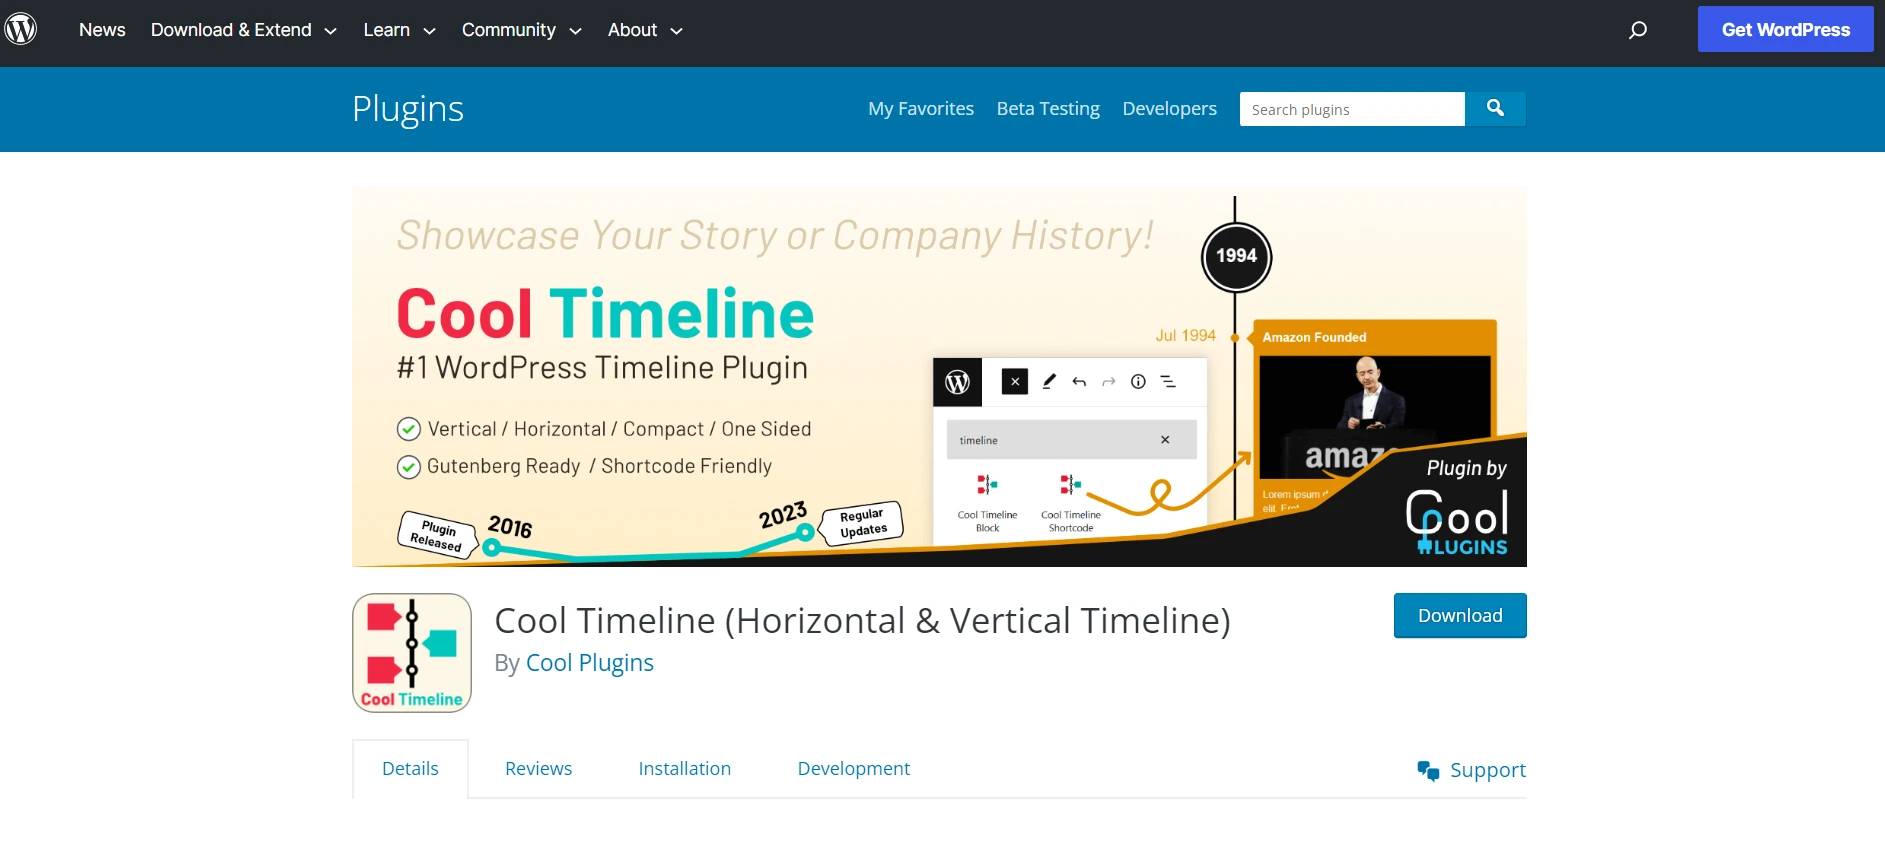 Cool Timeline - WordPress Timeline Plugin